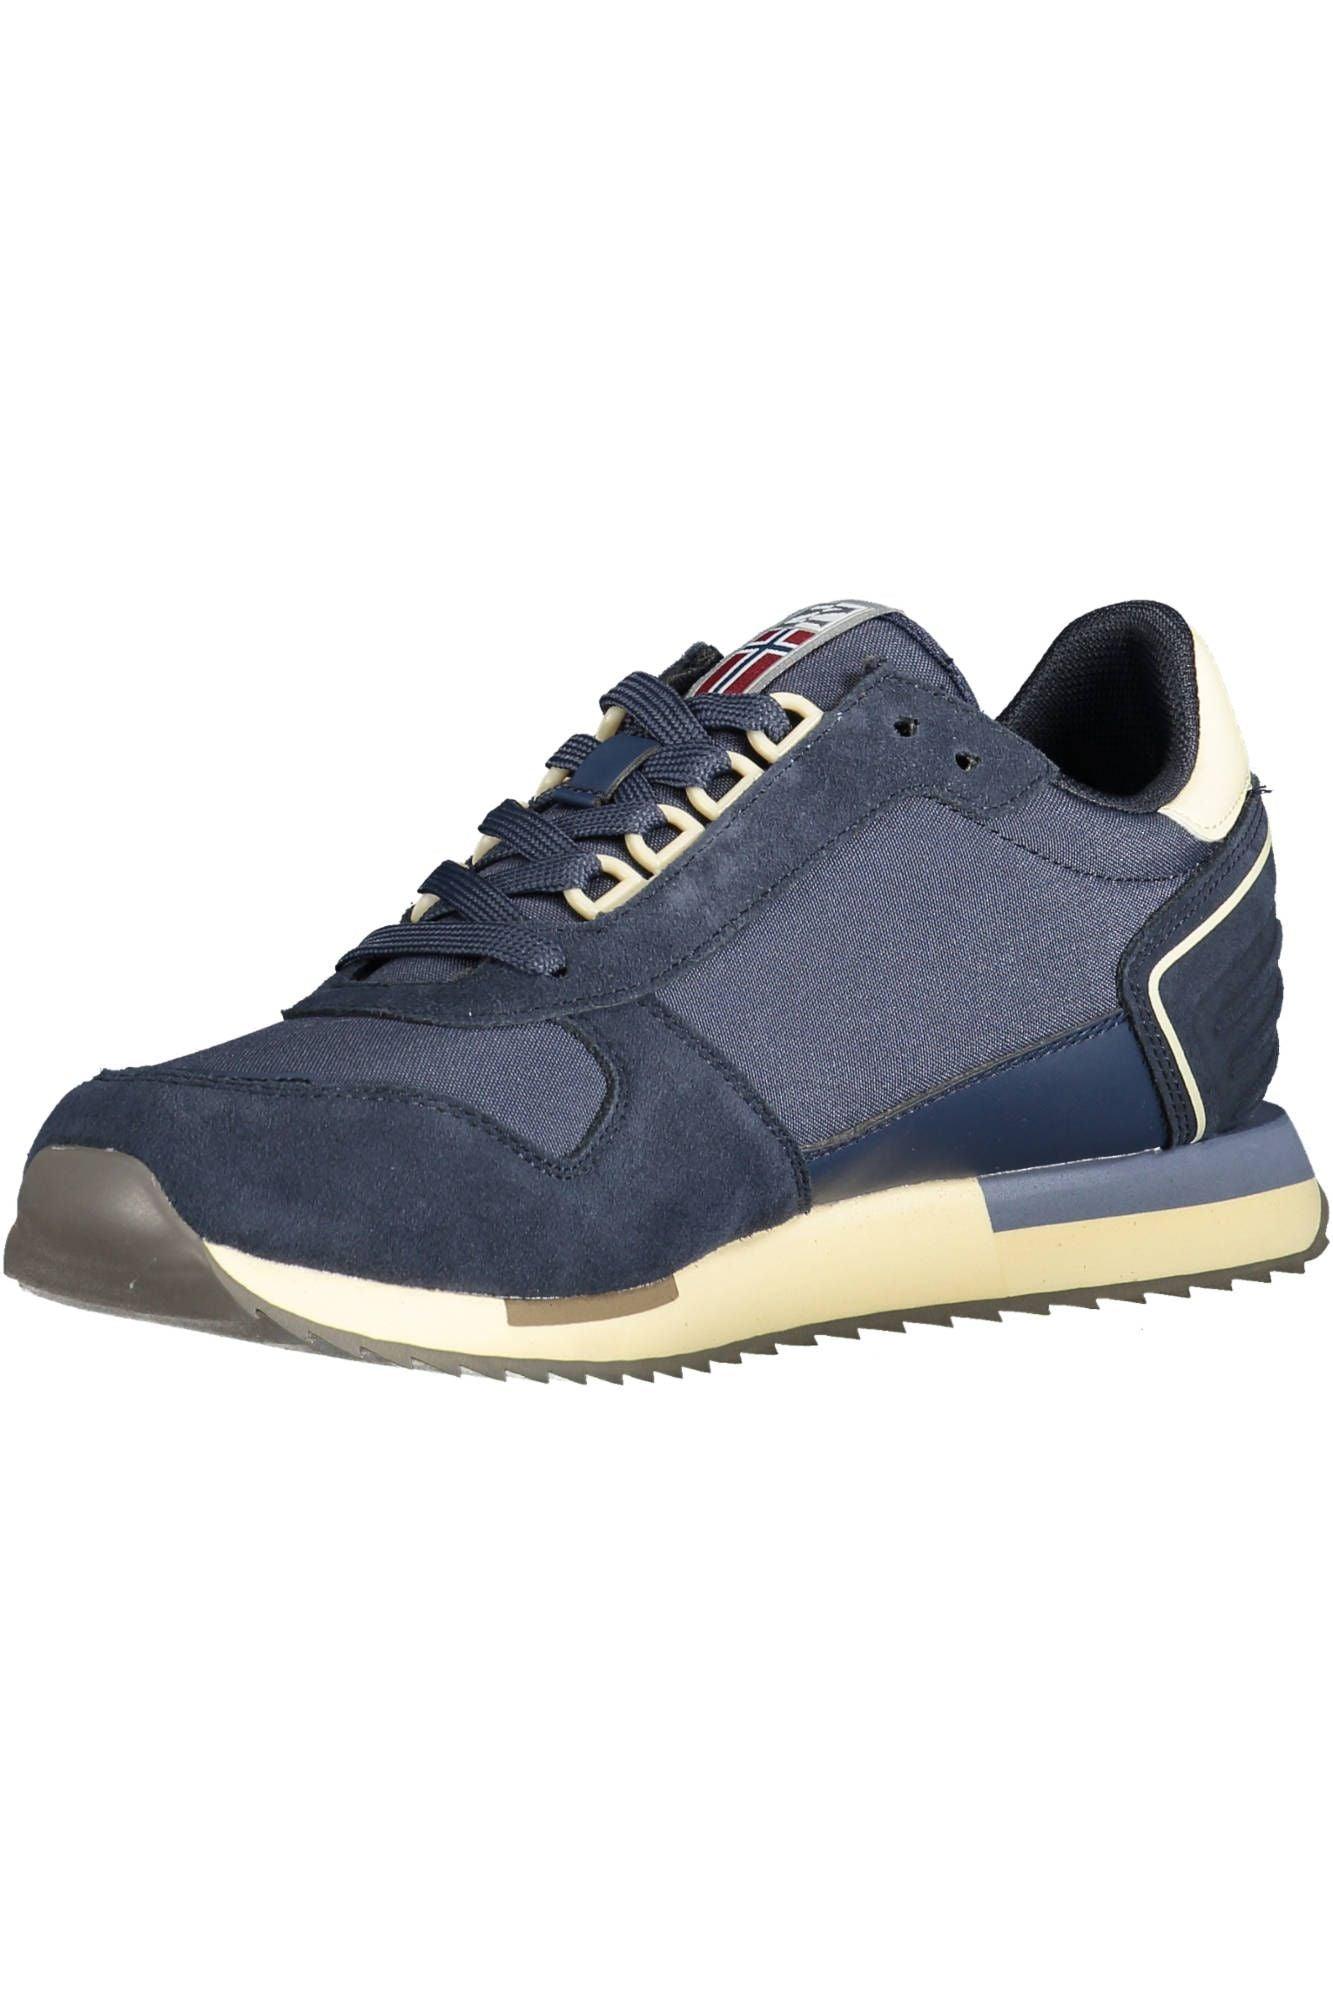 Napapijri Sleek Blue Sneakers with Contrasting Details - PER.FASHION